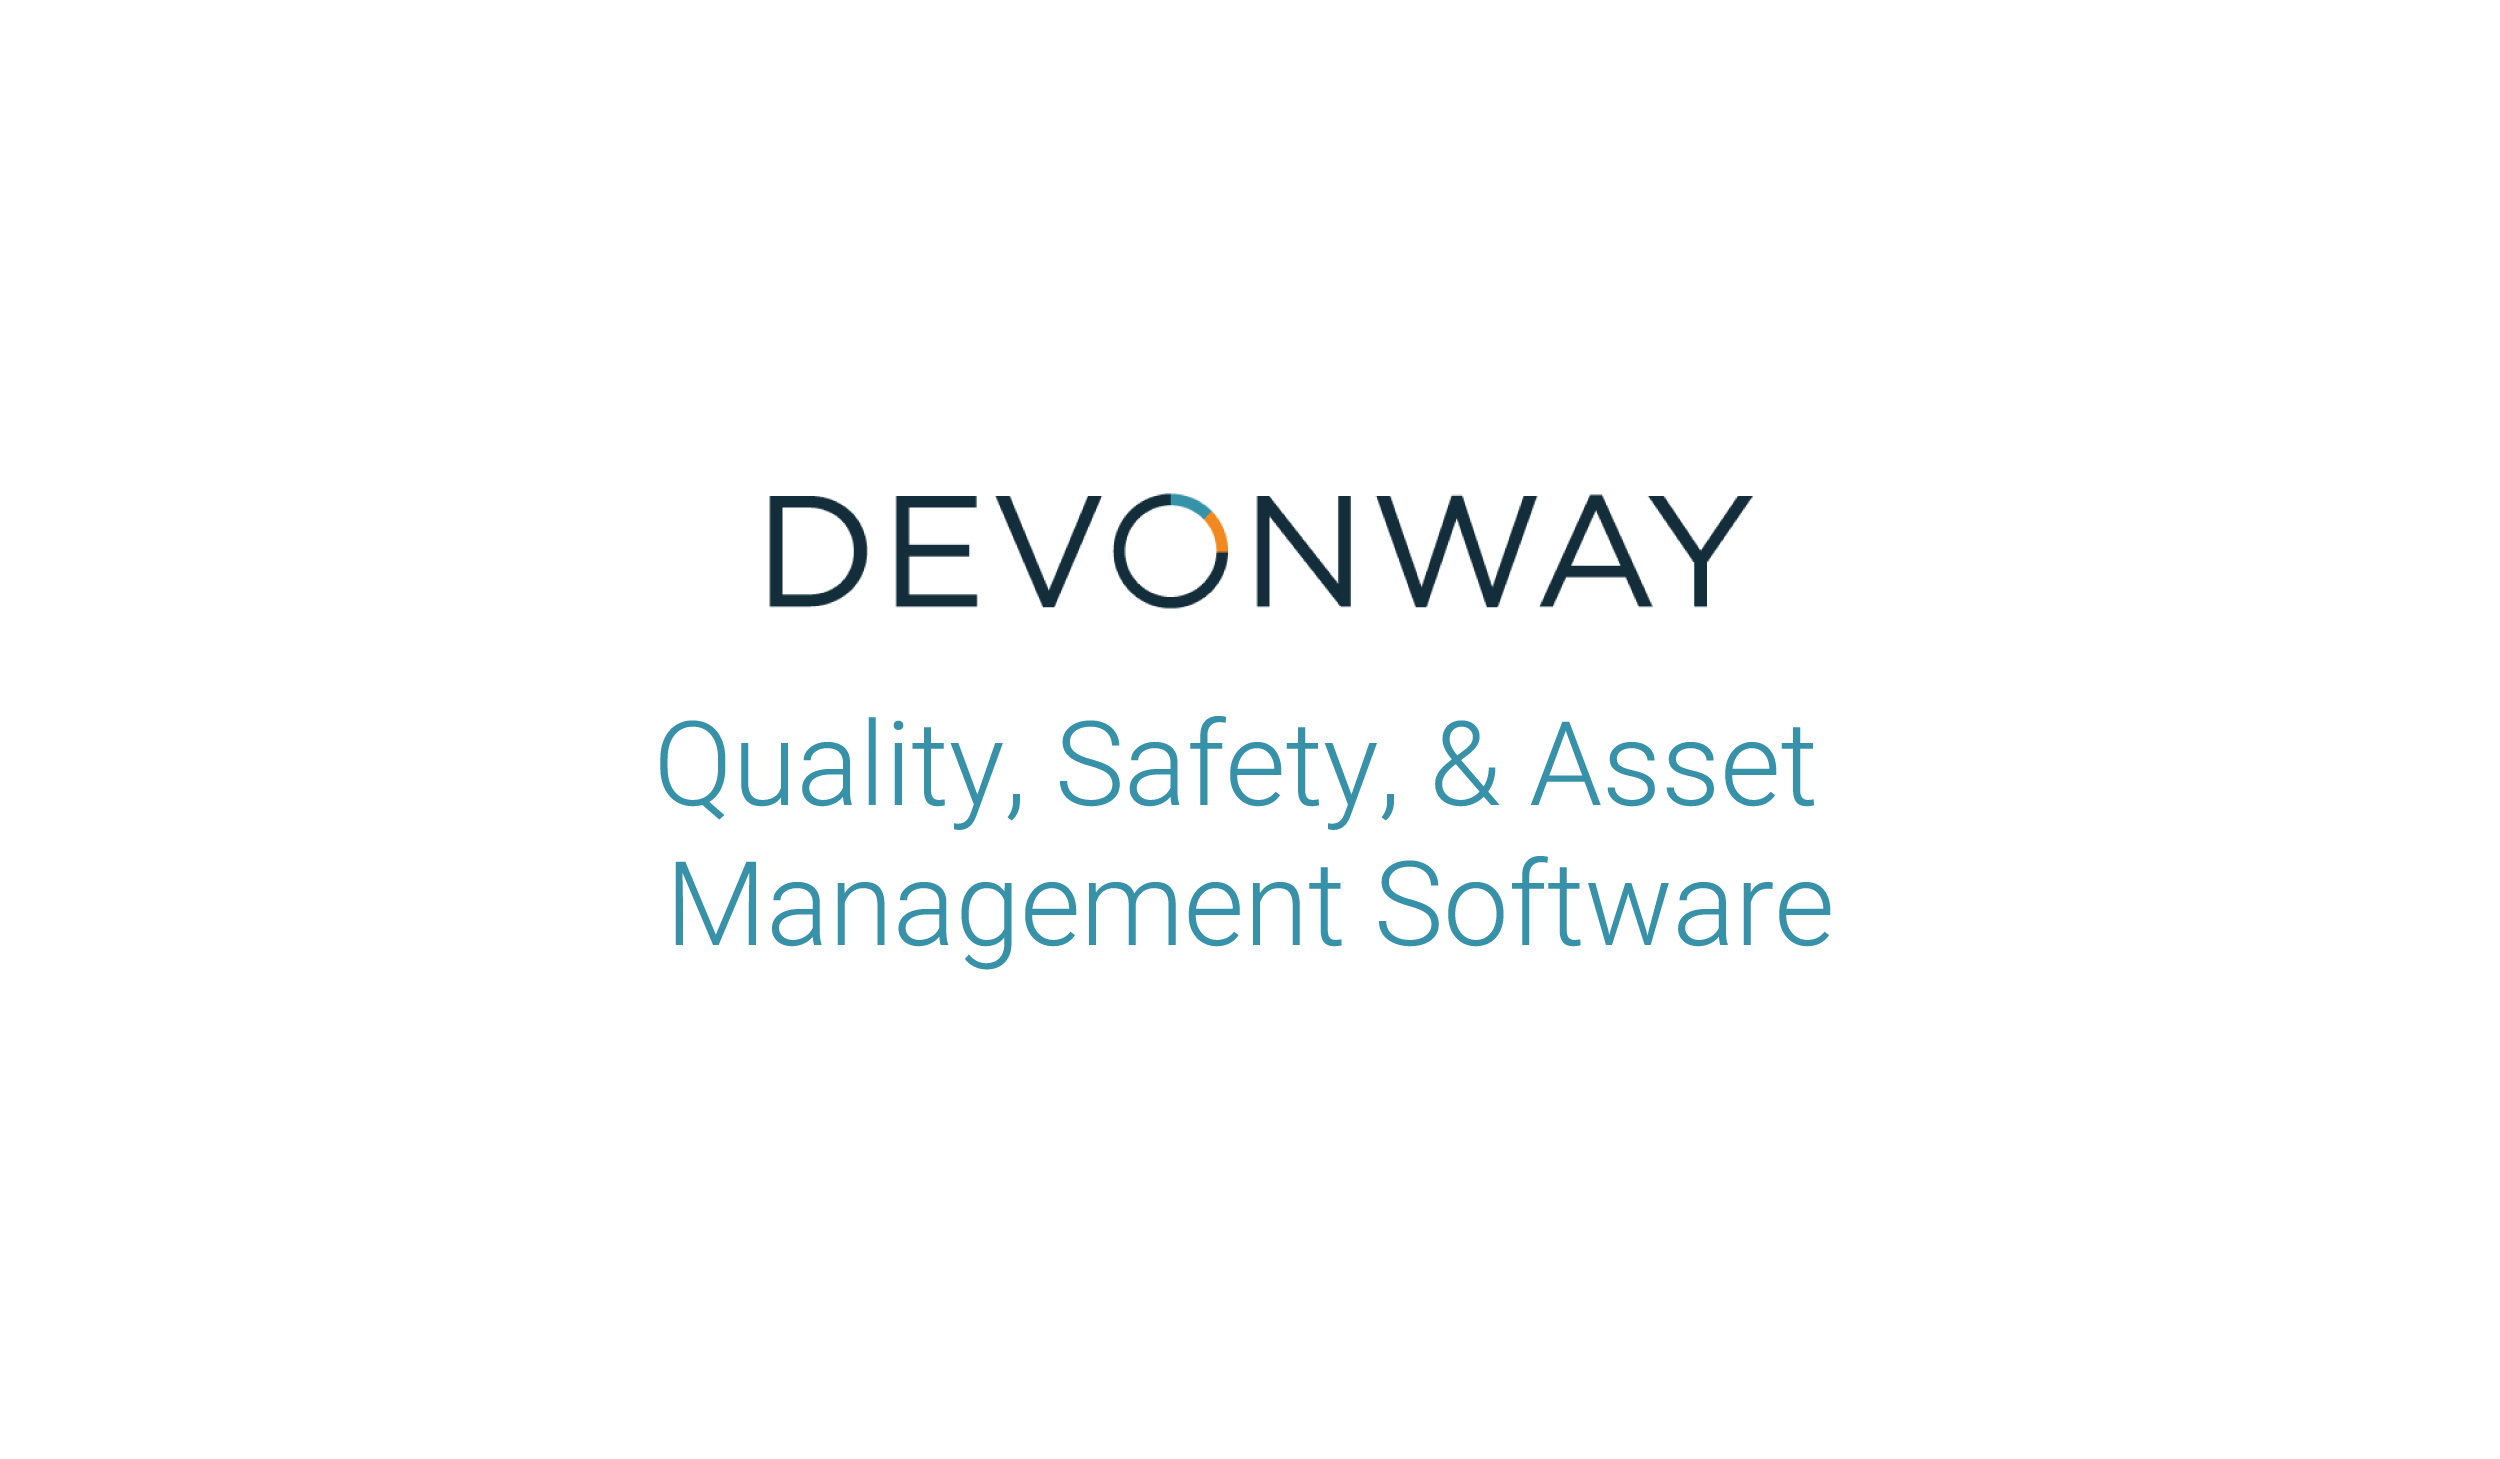 (c) Devonway.com